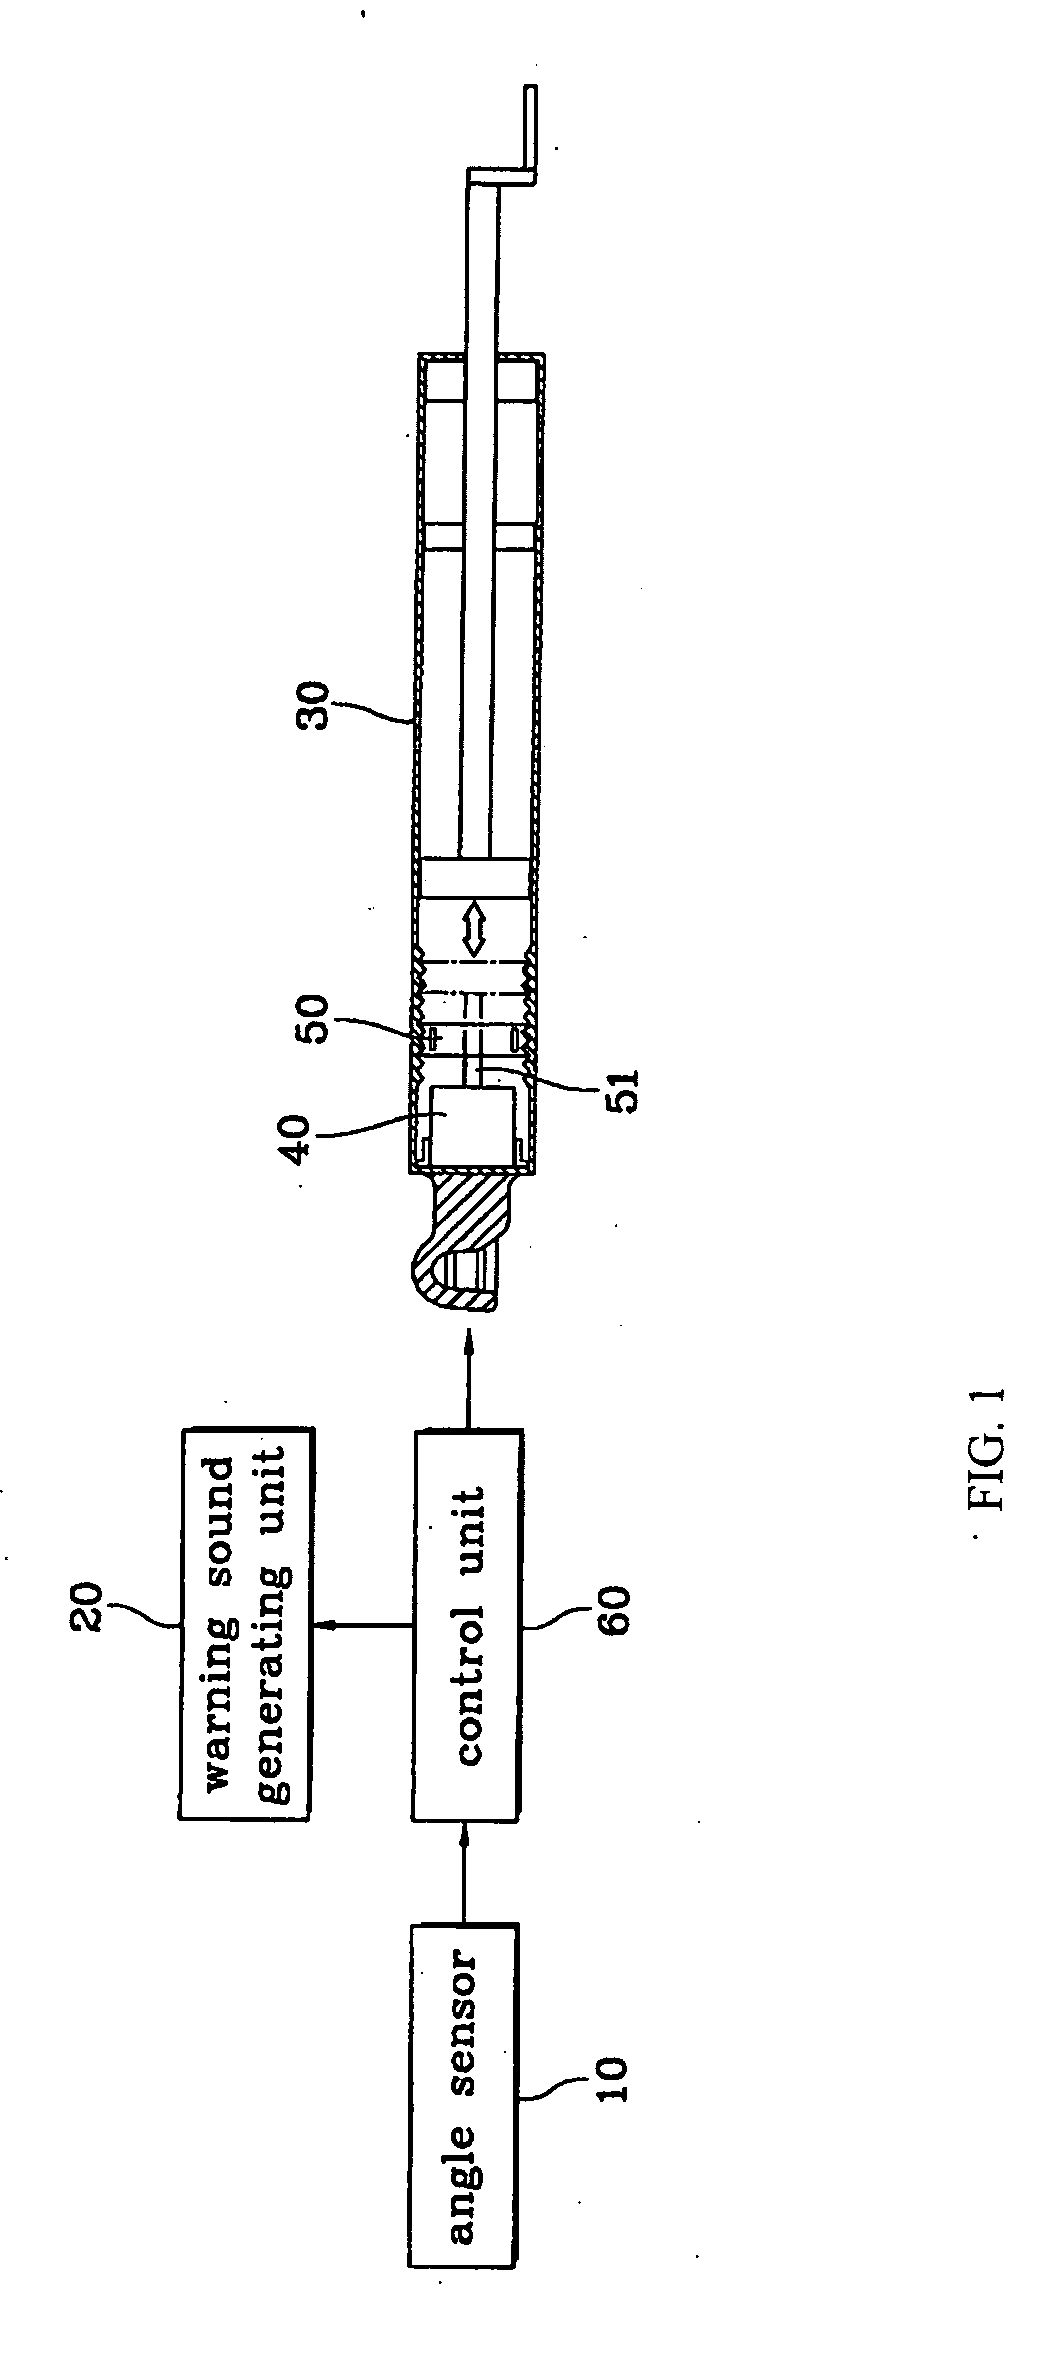 Method and system for adjusting internal pressure of gas lifter using angle sensor